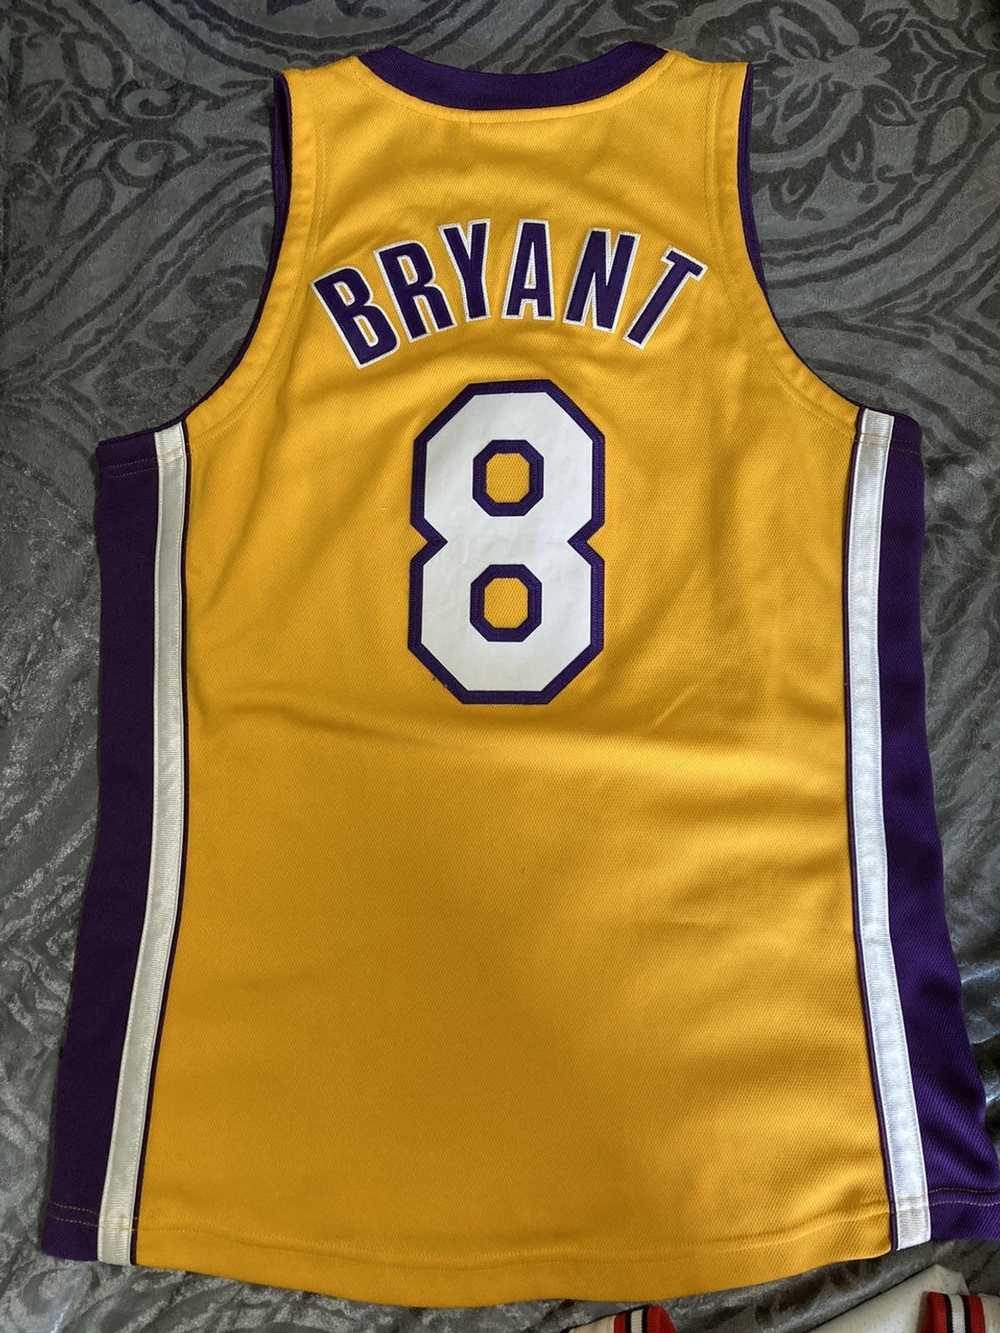 Hype Kobe Bryant Jersey - image 1